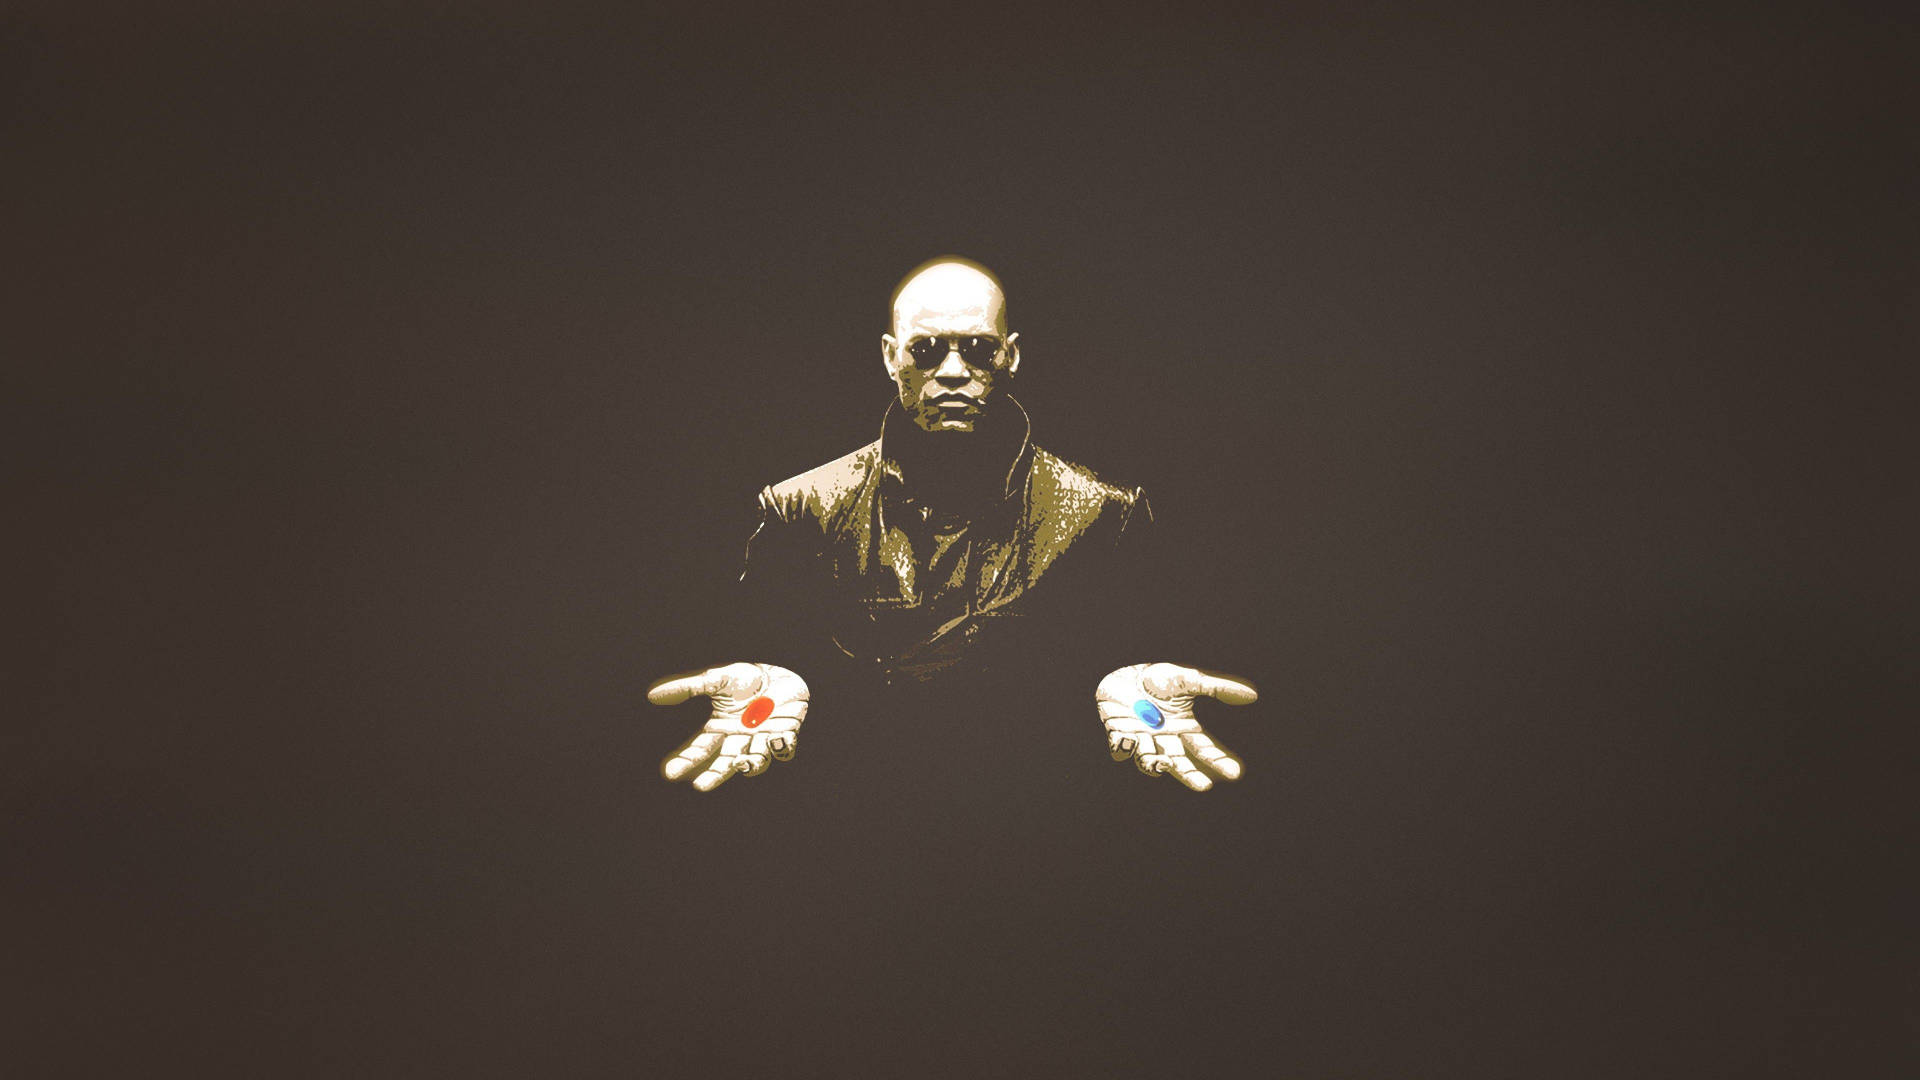 Download The Matrix Morpheus Red And Blue Pills Wallpaper